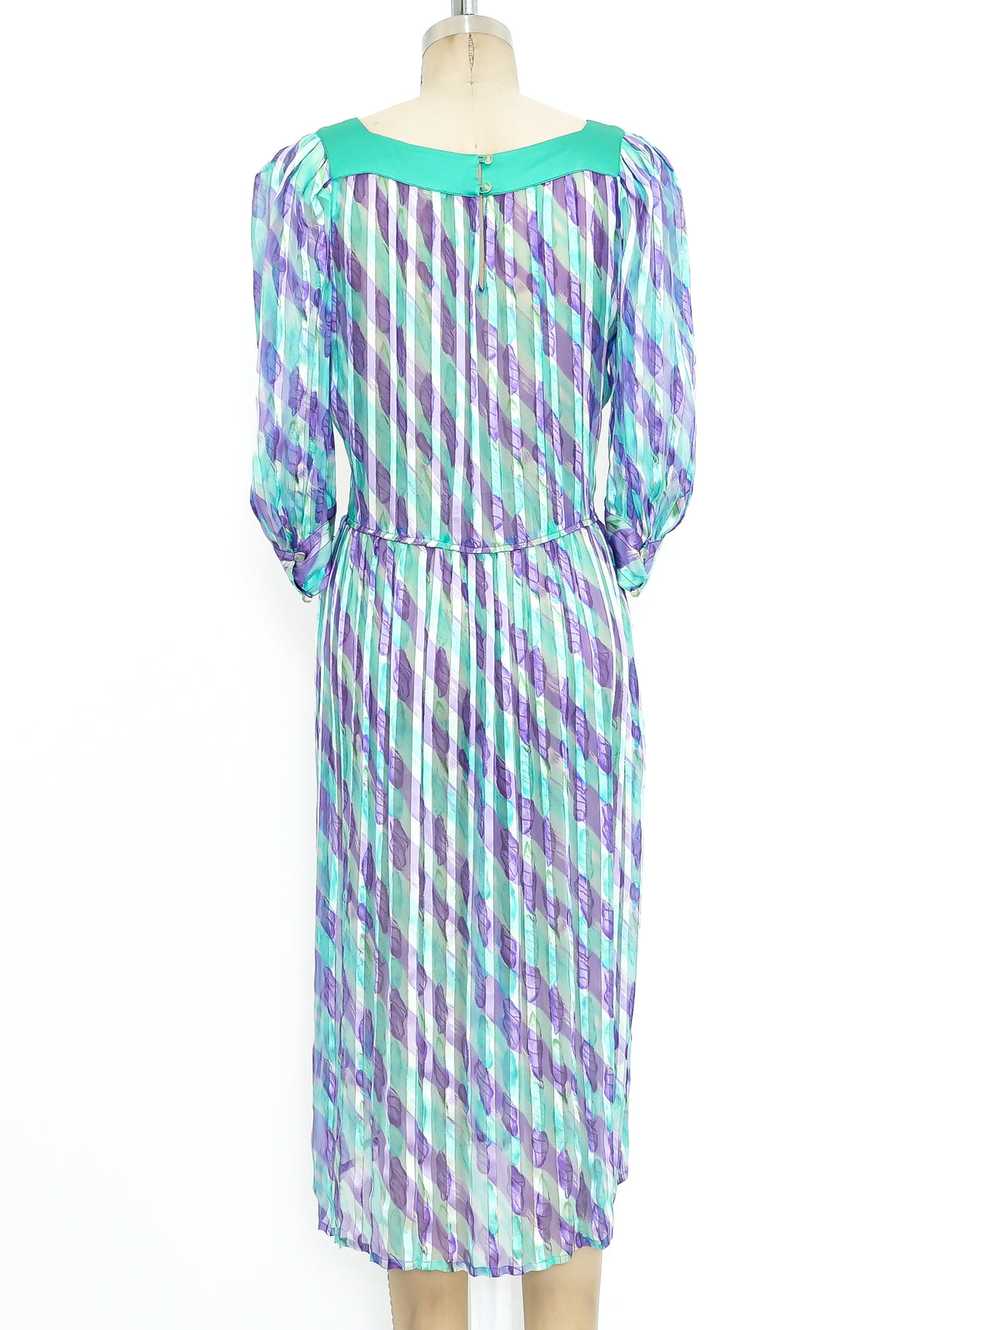 Watercolor Printed Silk Chiffon Dress - image 5